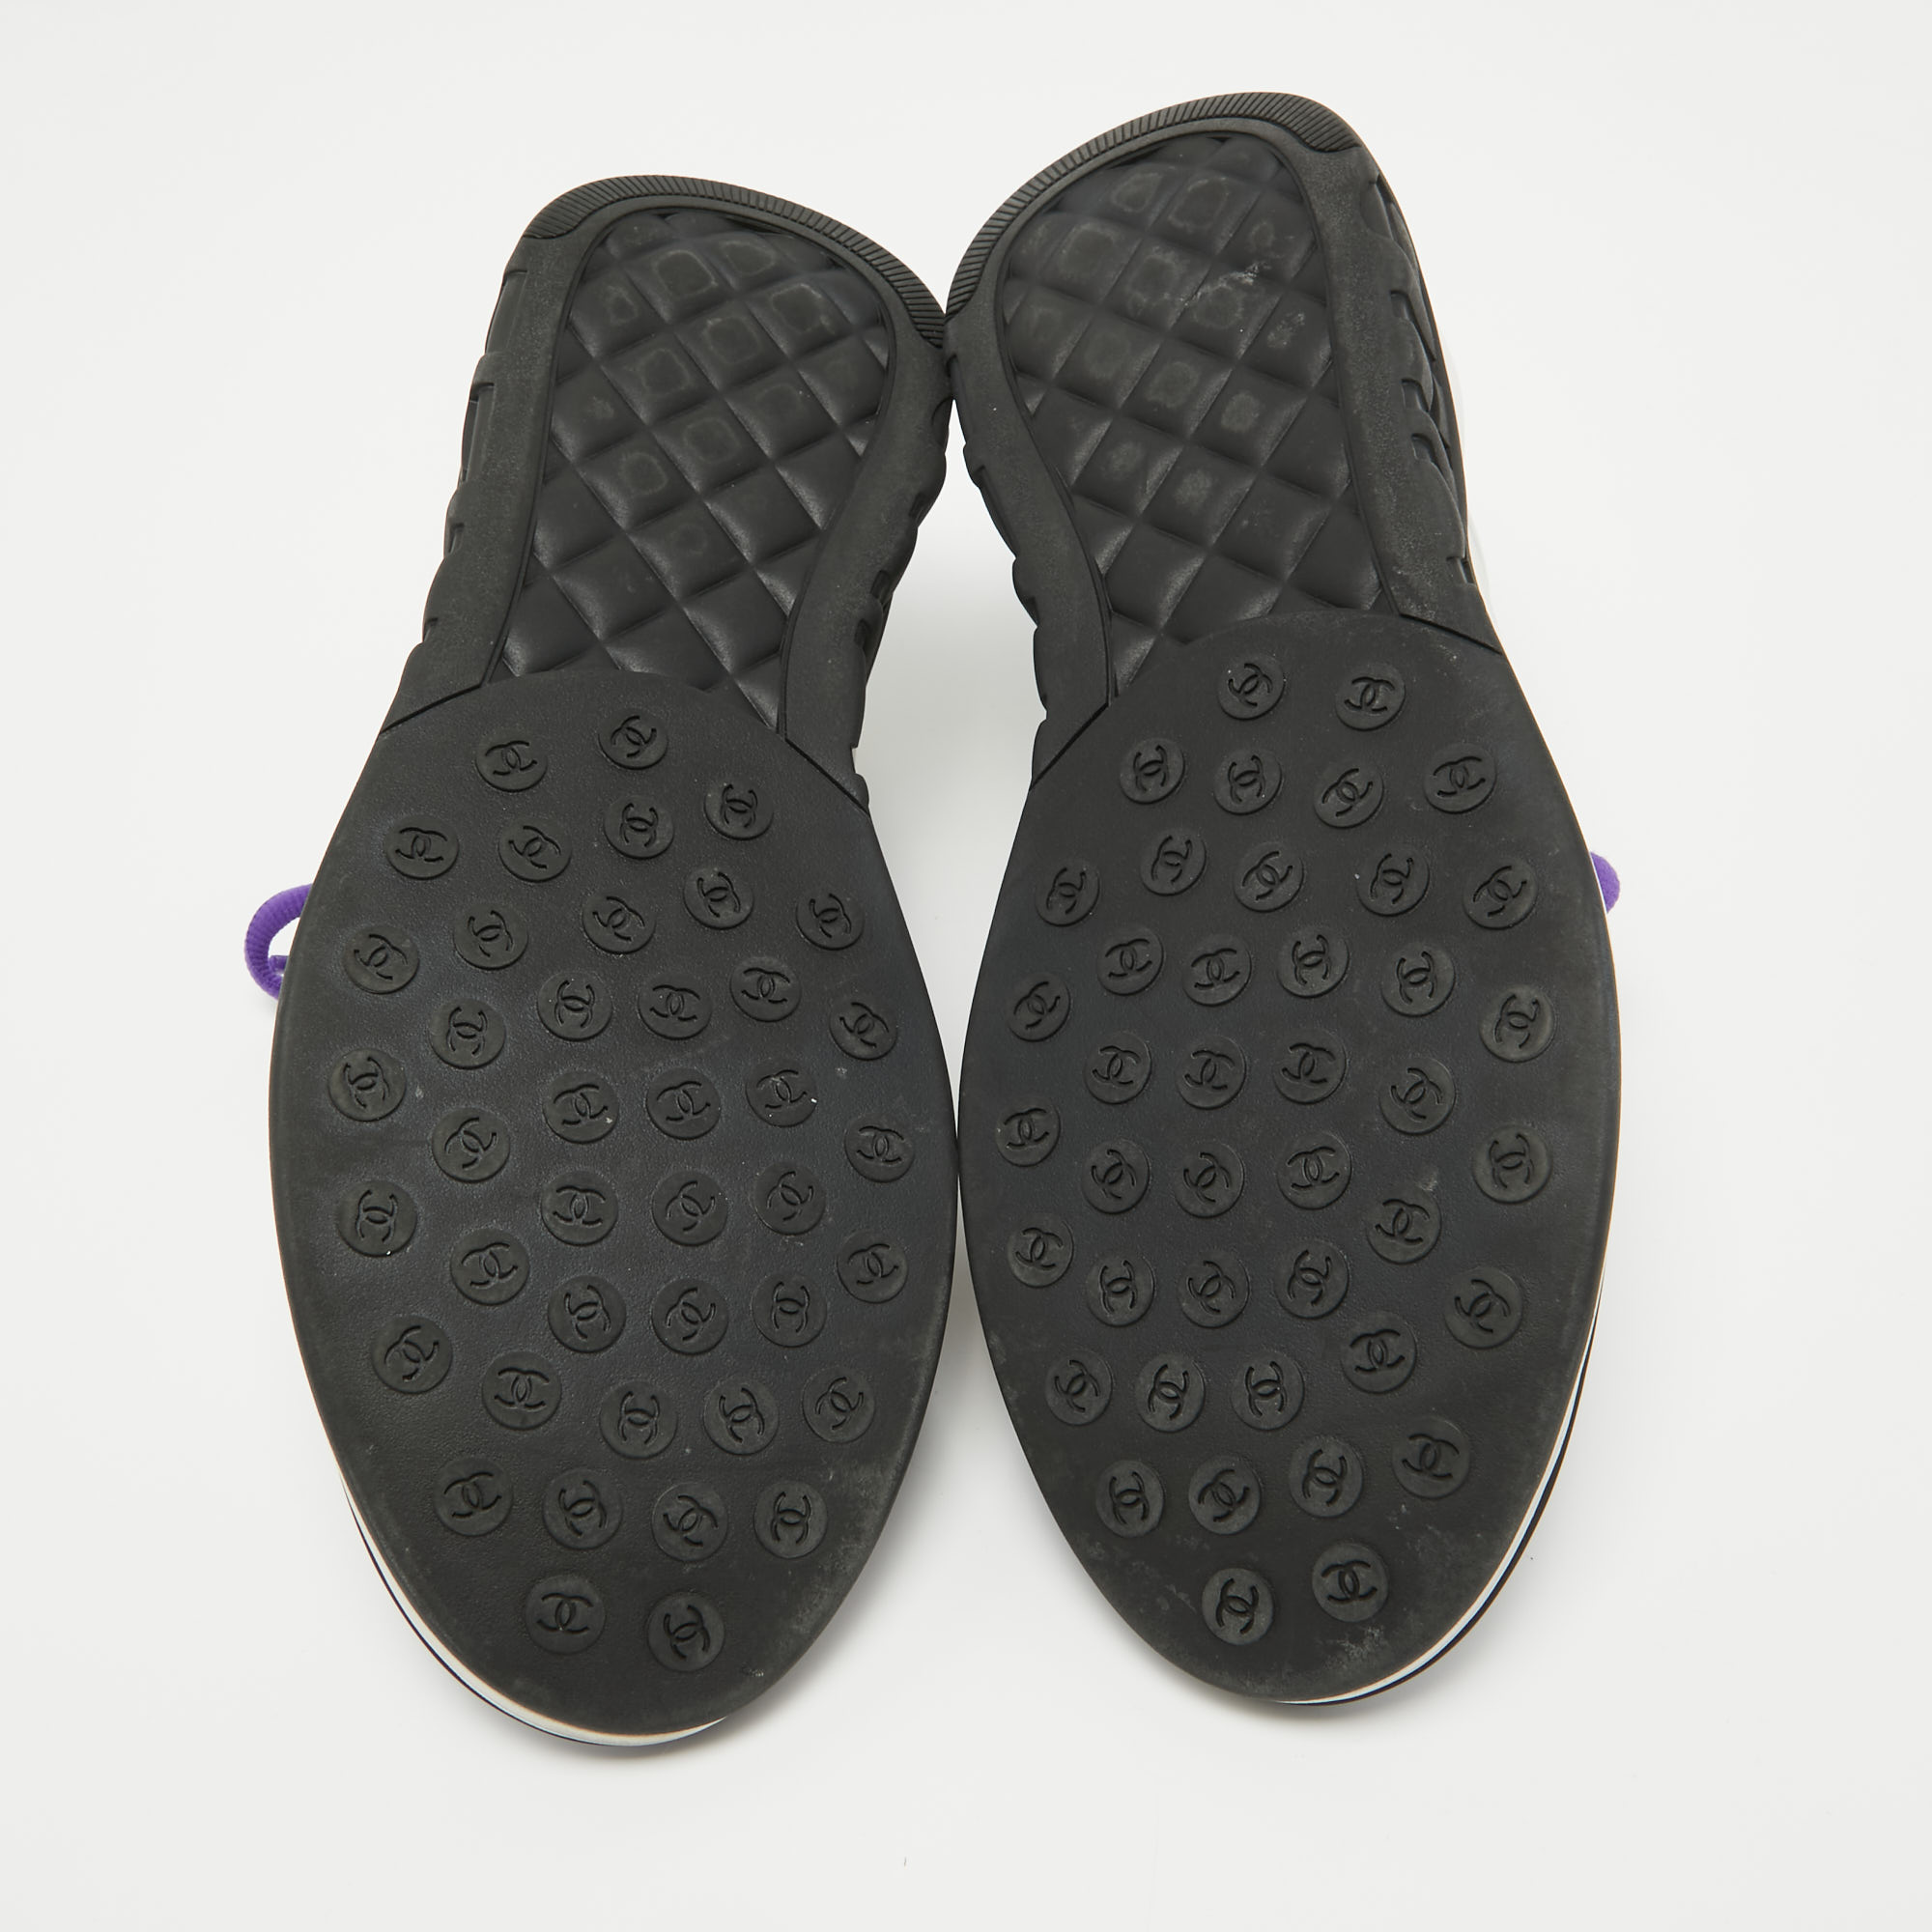 Chanel Purple/White Mesh Interlocking CC Logo Sneakers Size 40.5